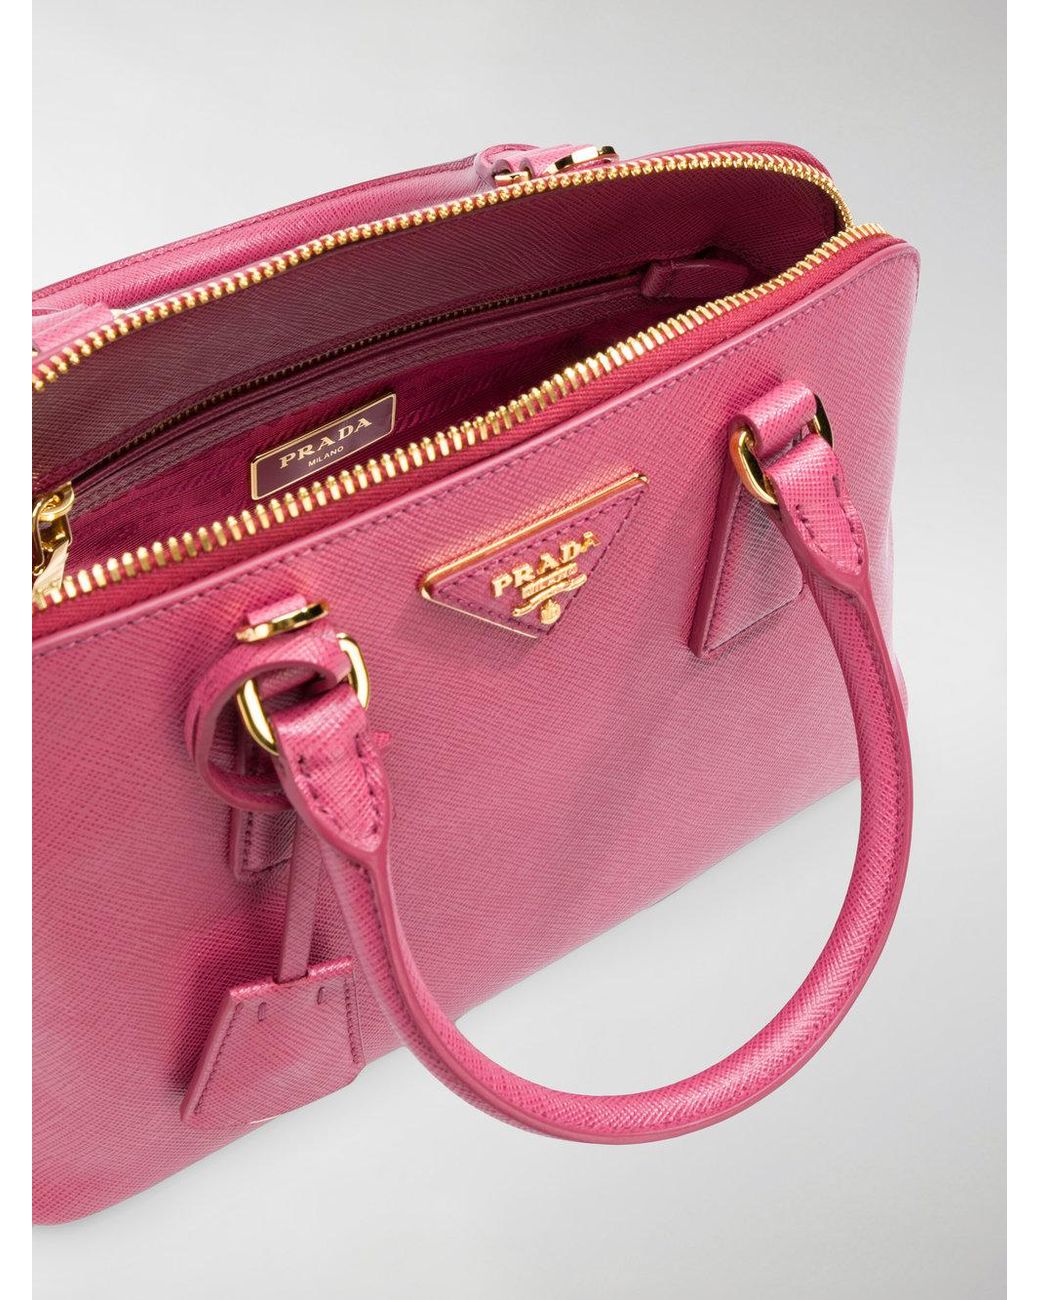 Prada Leather Promenade Mini Bag in Pink & Purple (Pink) | Lyst